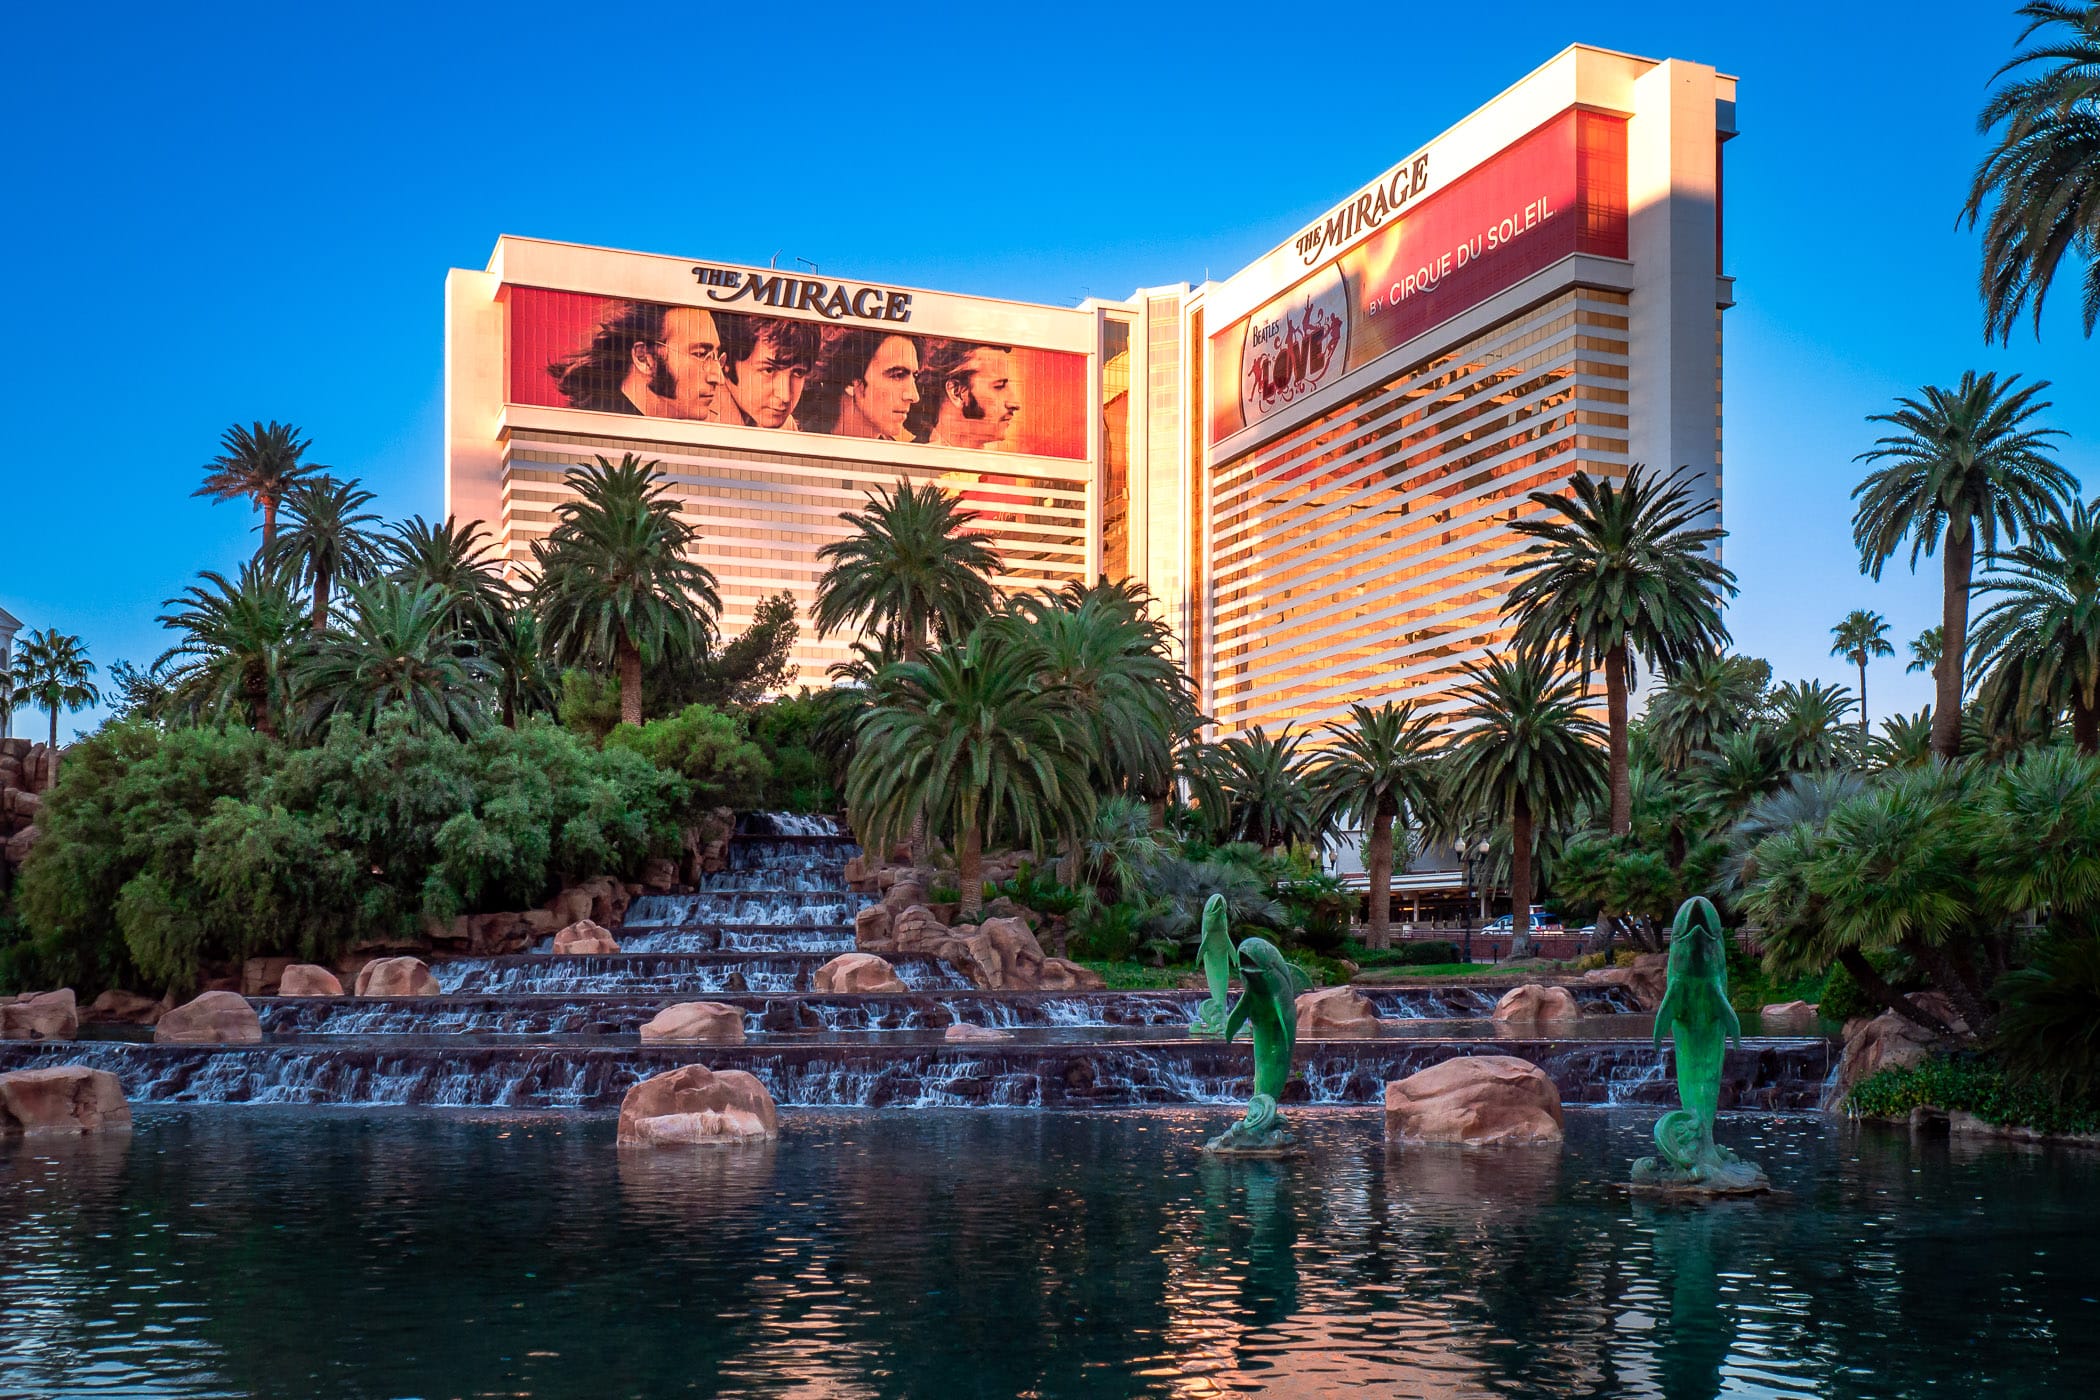 The early-morning sunlight illuminates Las Vegas' Mirage Hotel & Casino.